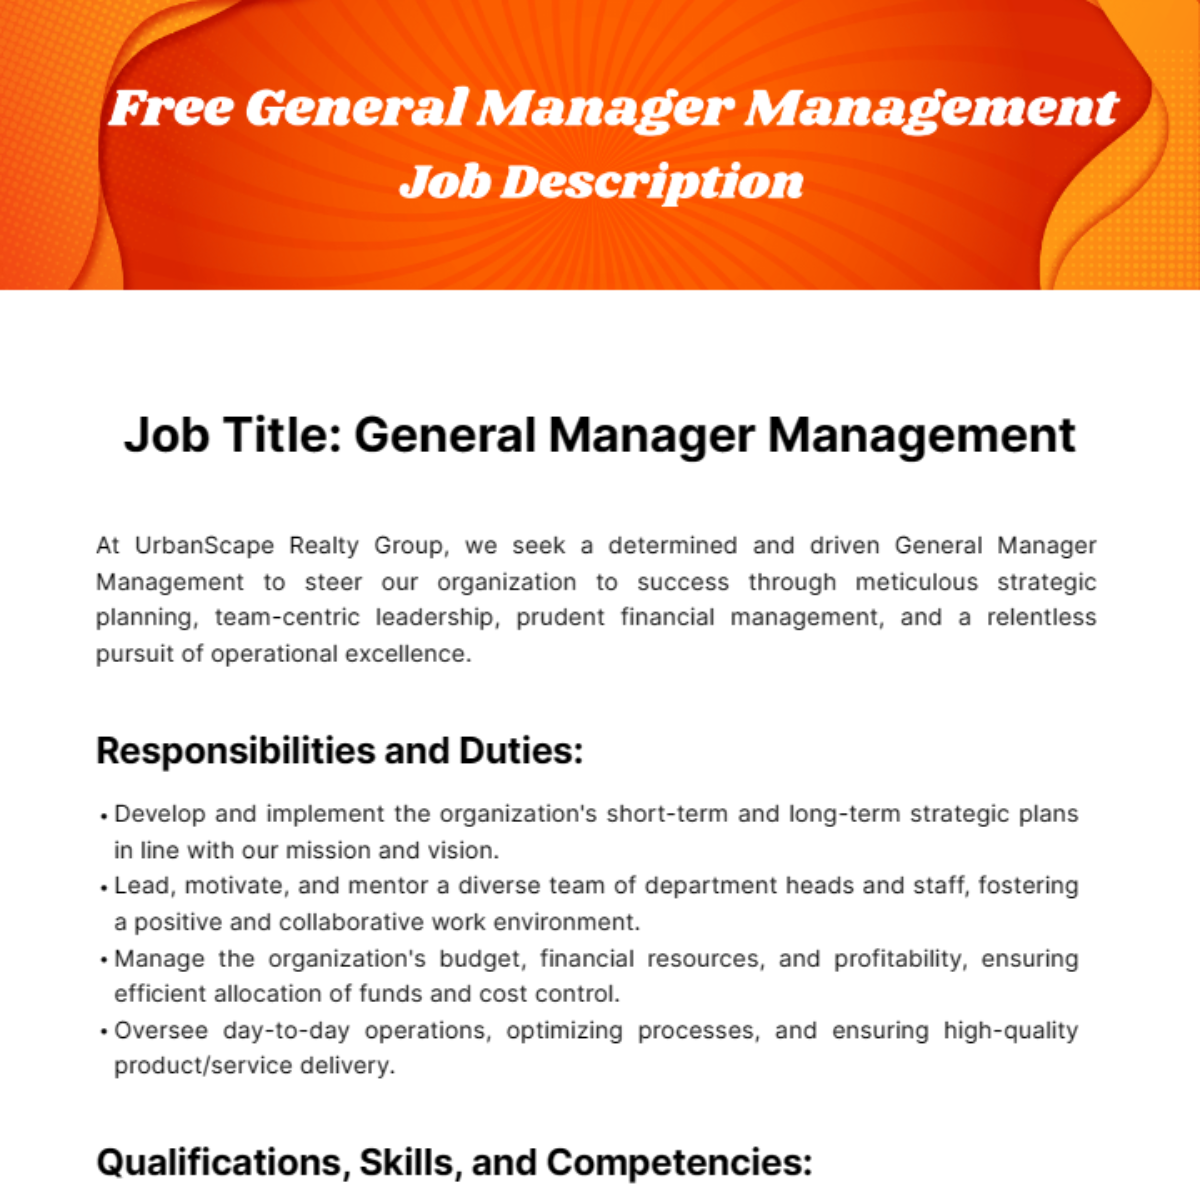 Free General Manager Management Job Description Template